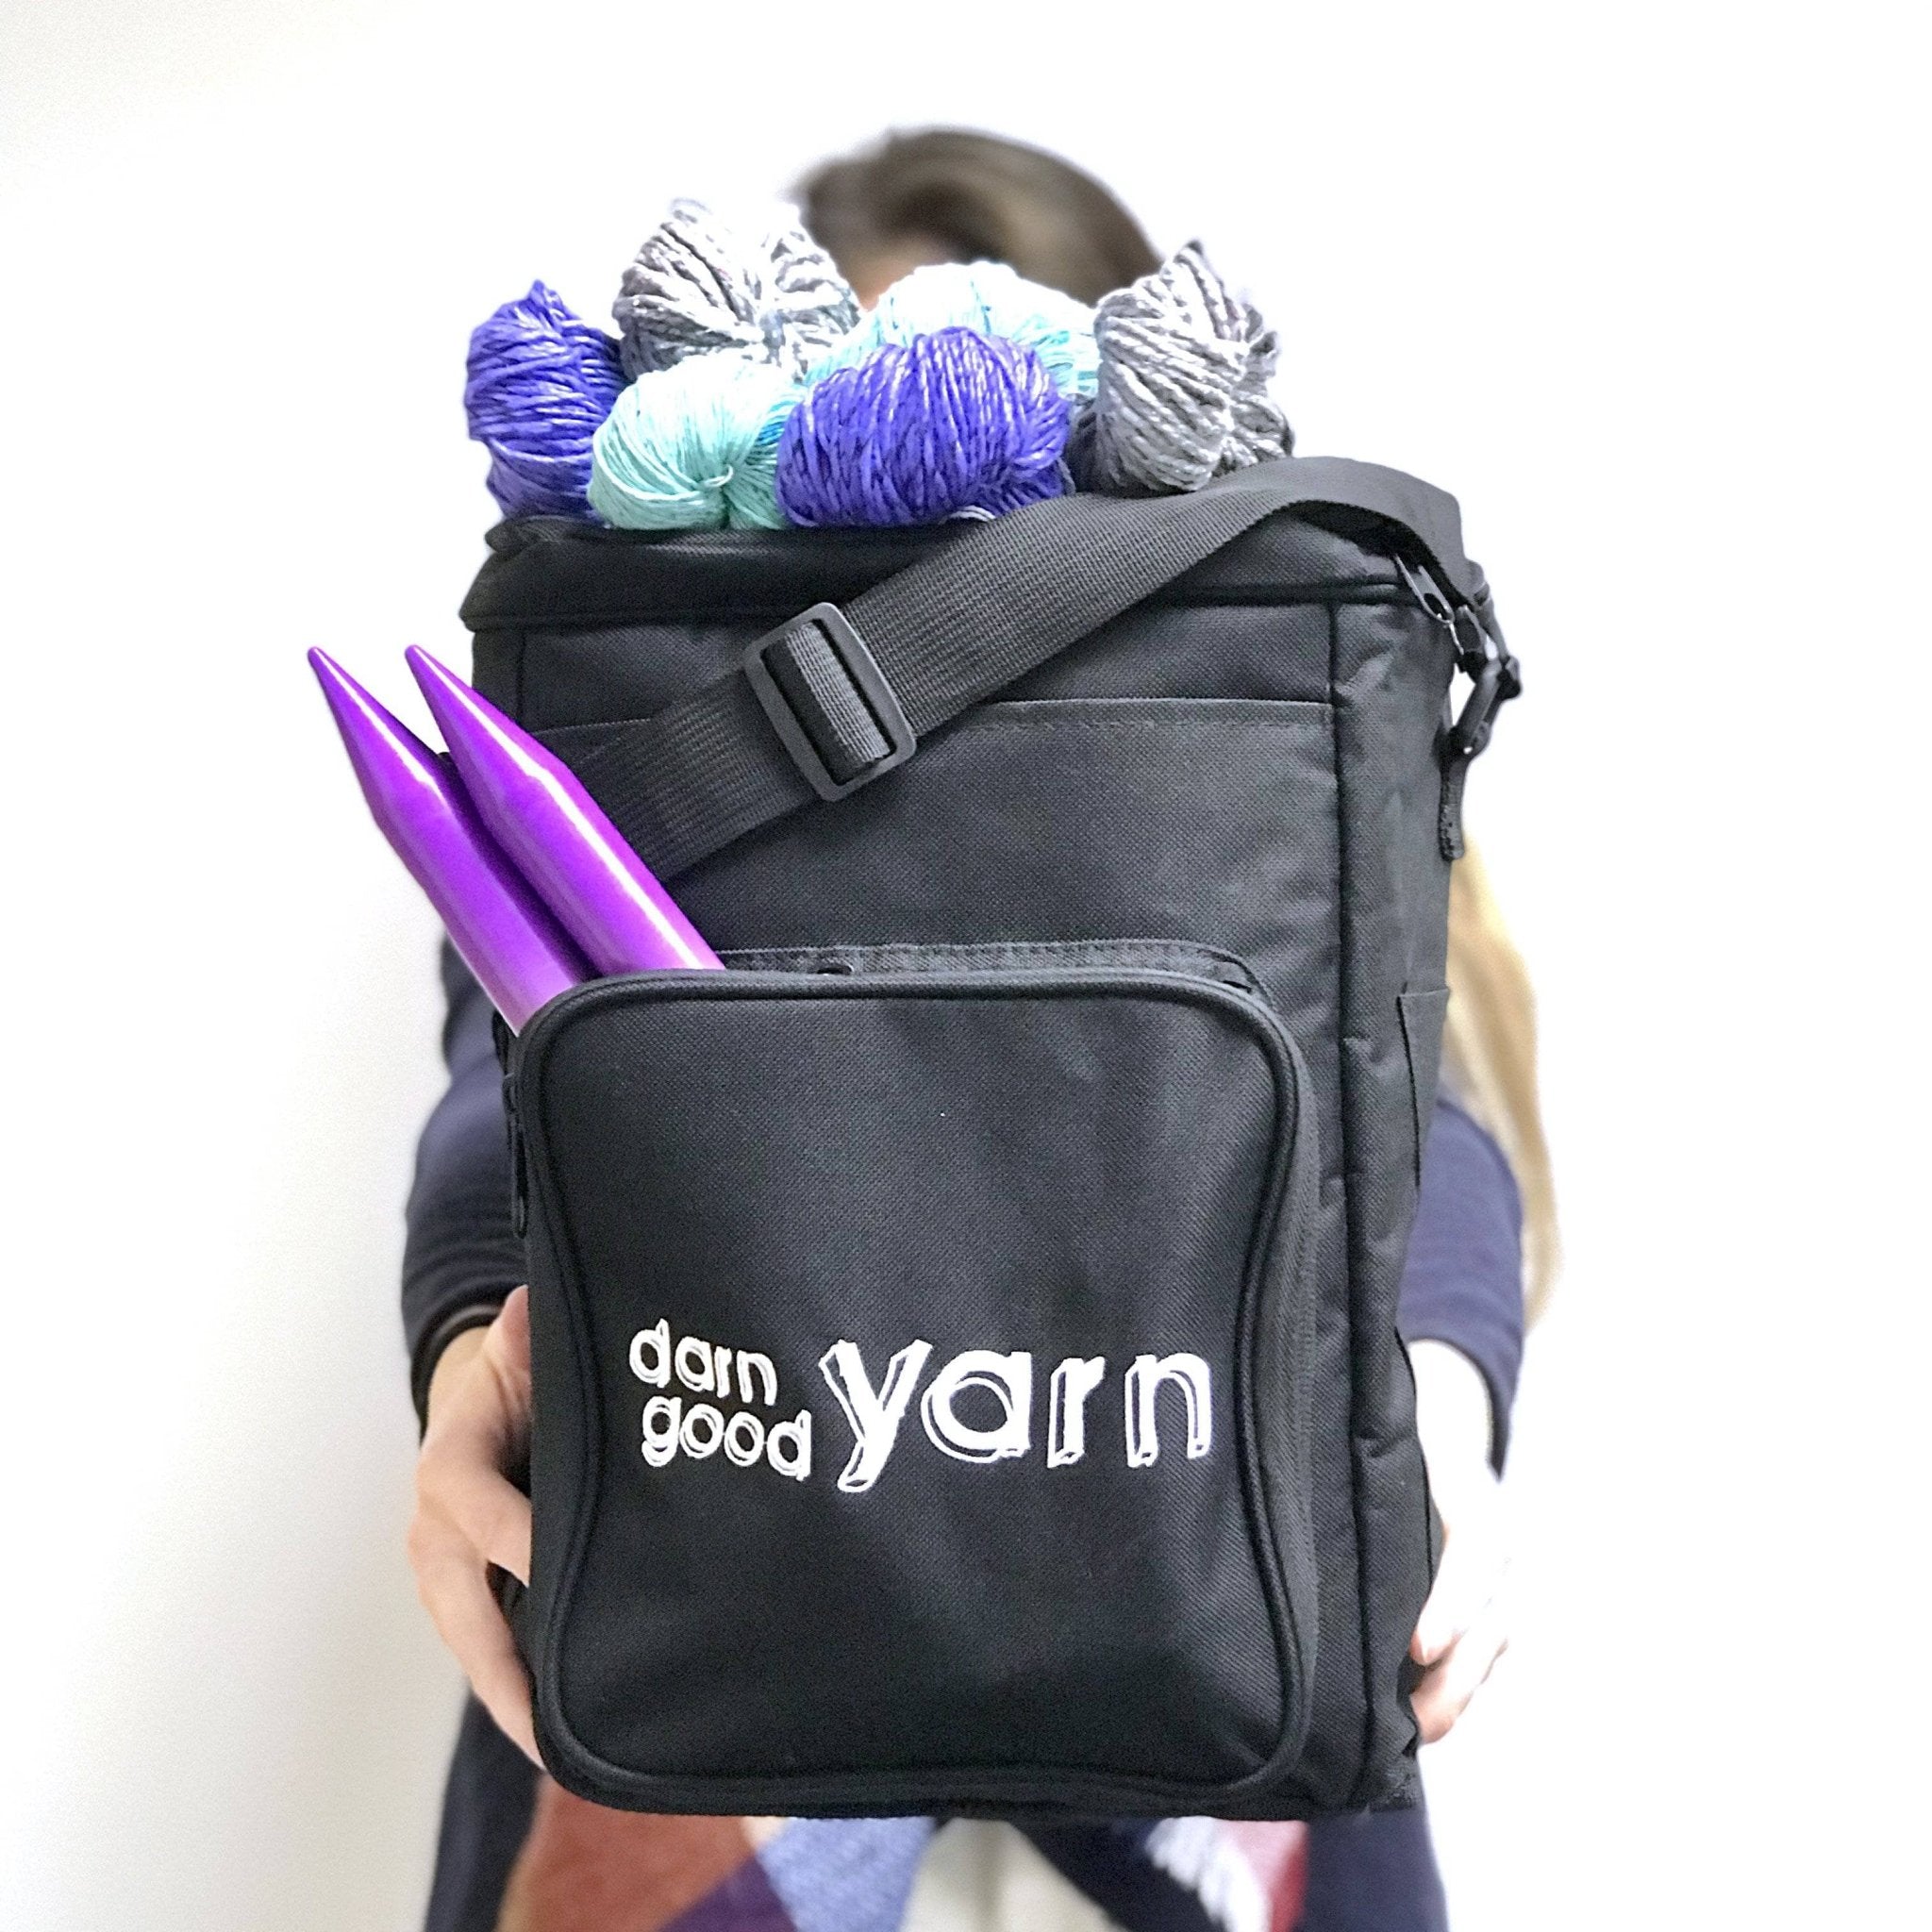 Yarn Storage Bag With Maple Leaves Knitting Tote Bag Orange Square